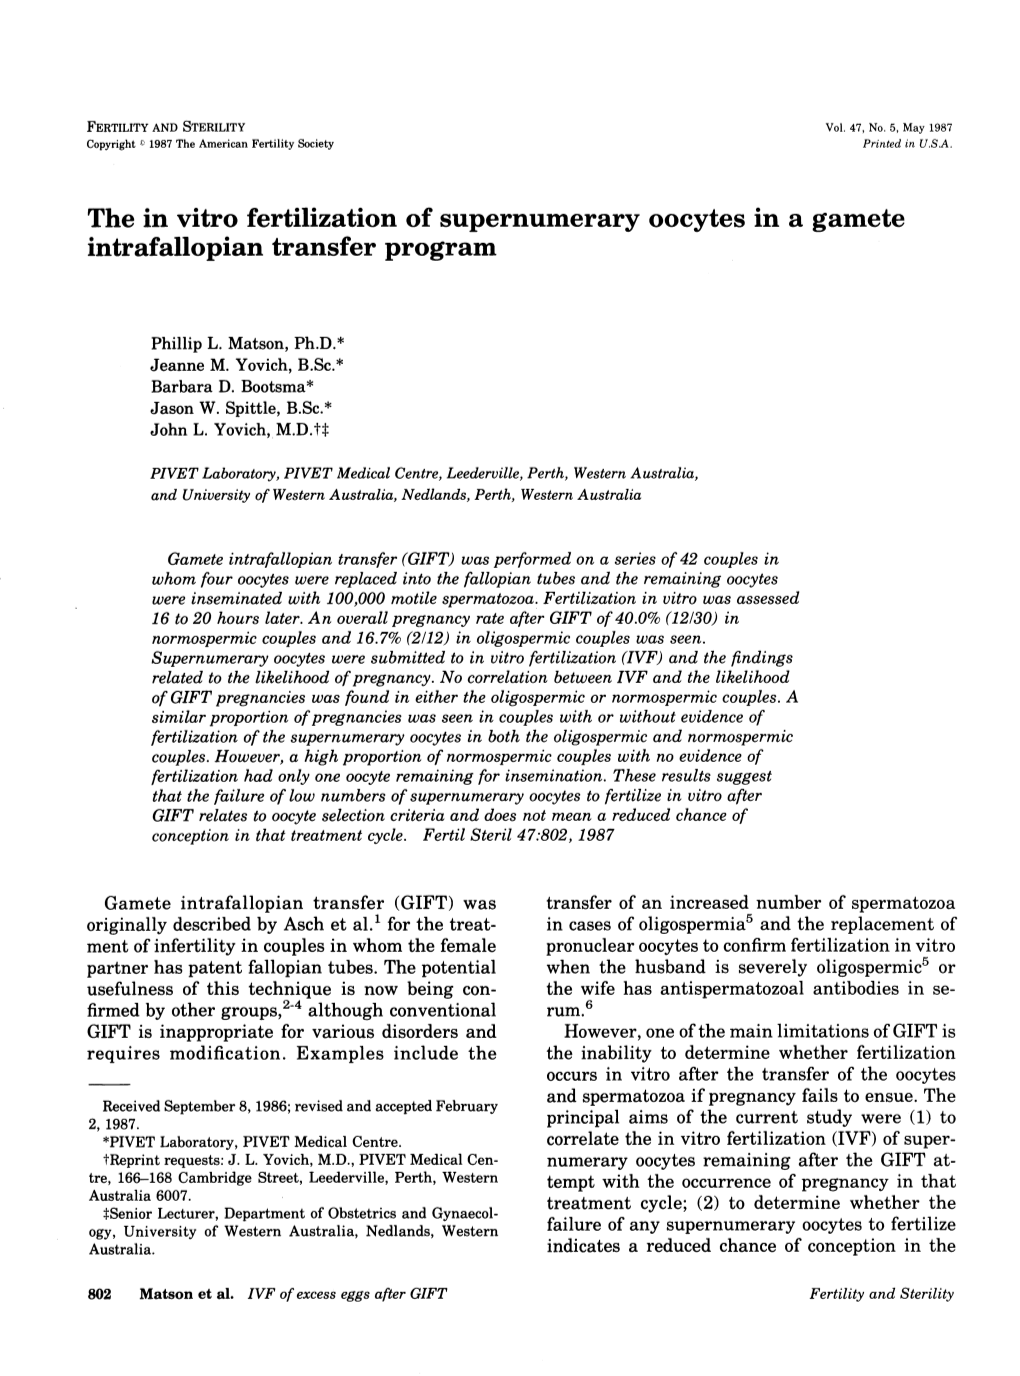 (1987) the in Vitro Fertilization of Supernumerary Oocytes in a Gamete